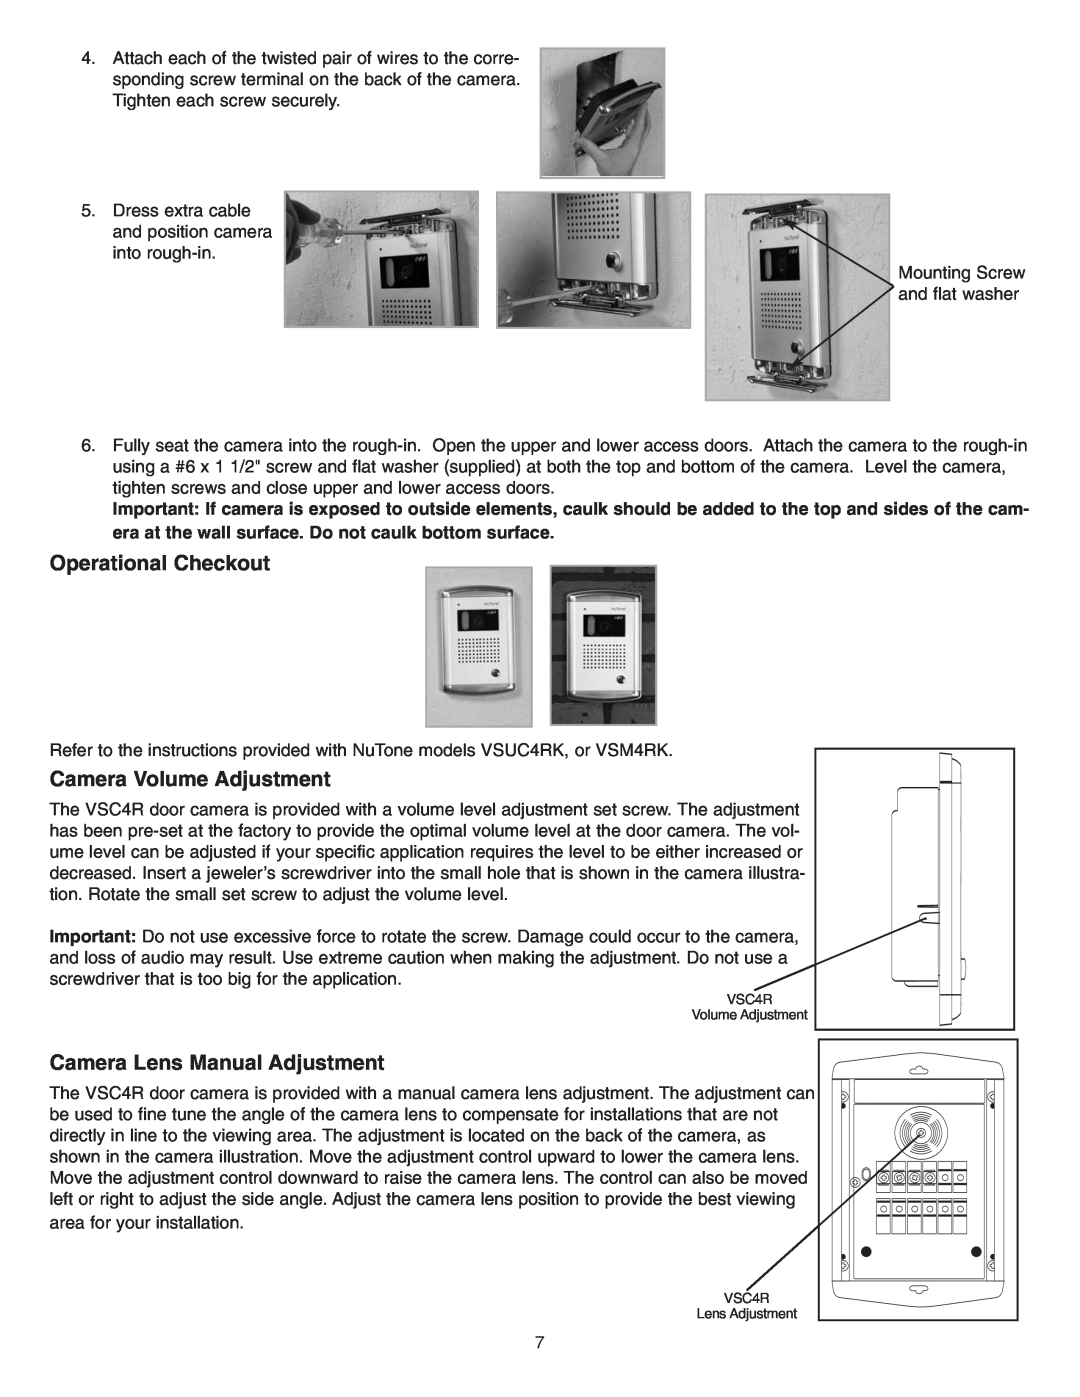 NuTone VSC4R installation instructions Operational Checkout, Camera Volume Adjustment, Camera Lens Manual Adjustment 